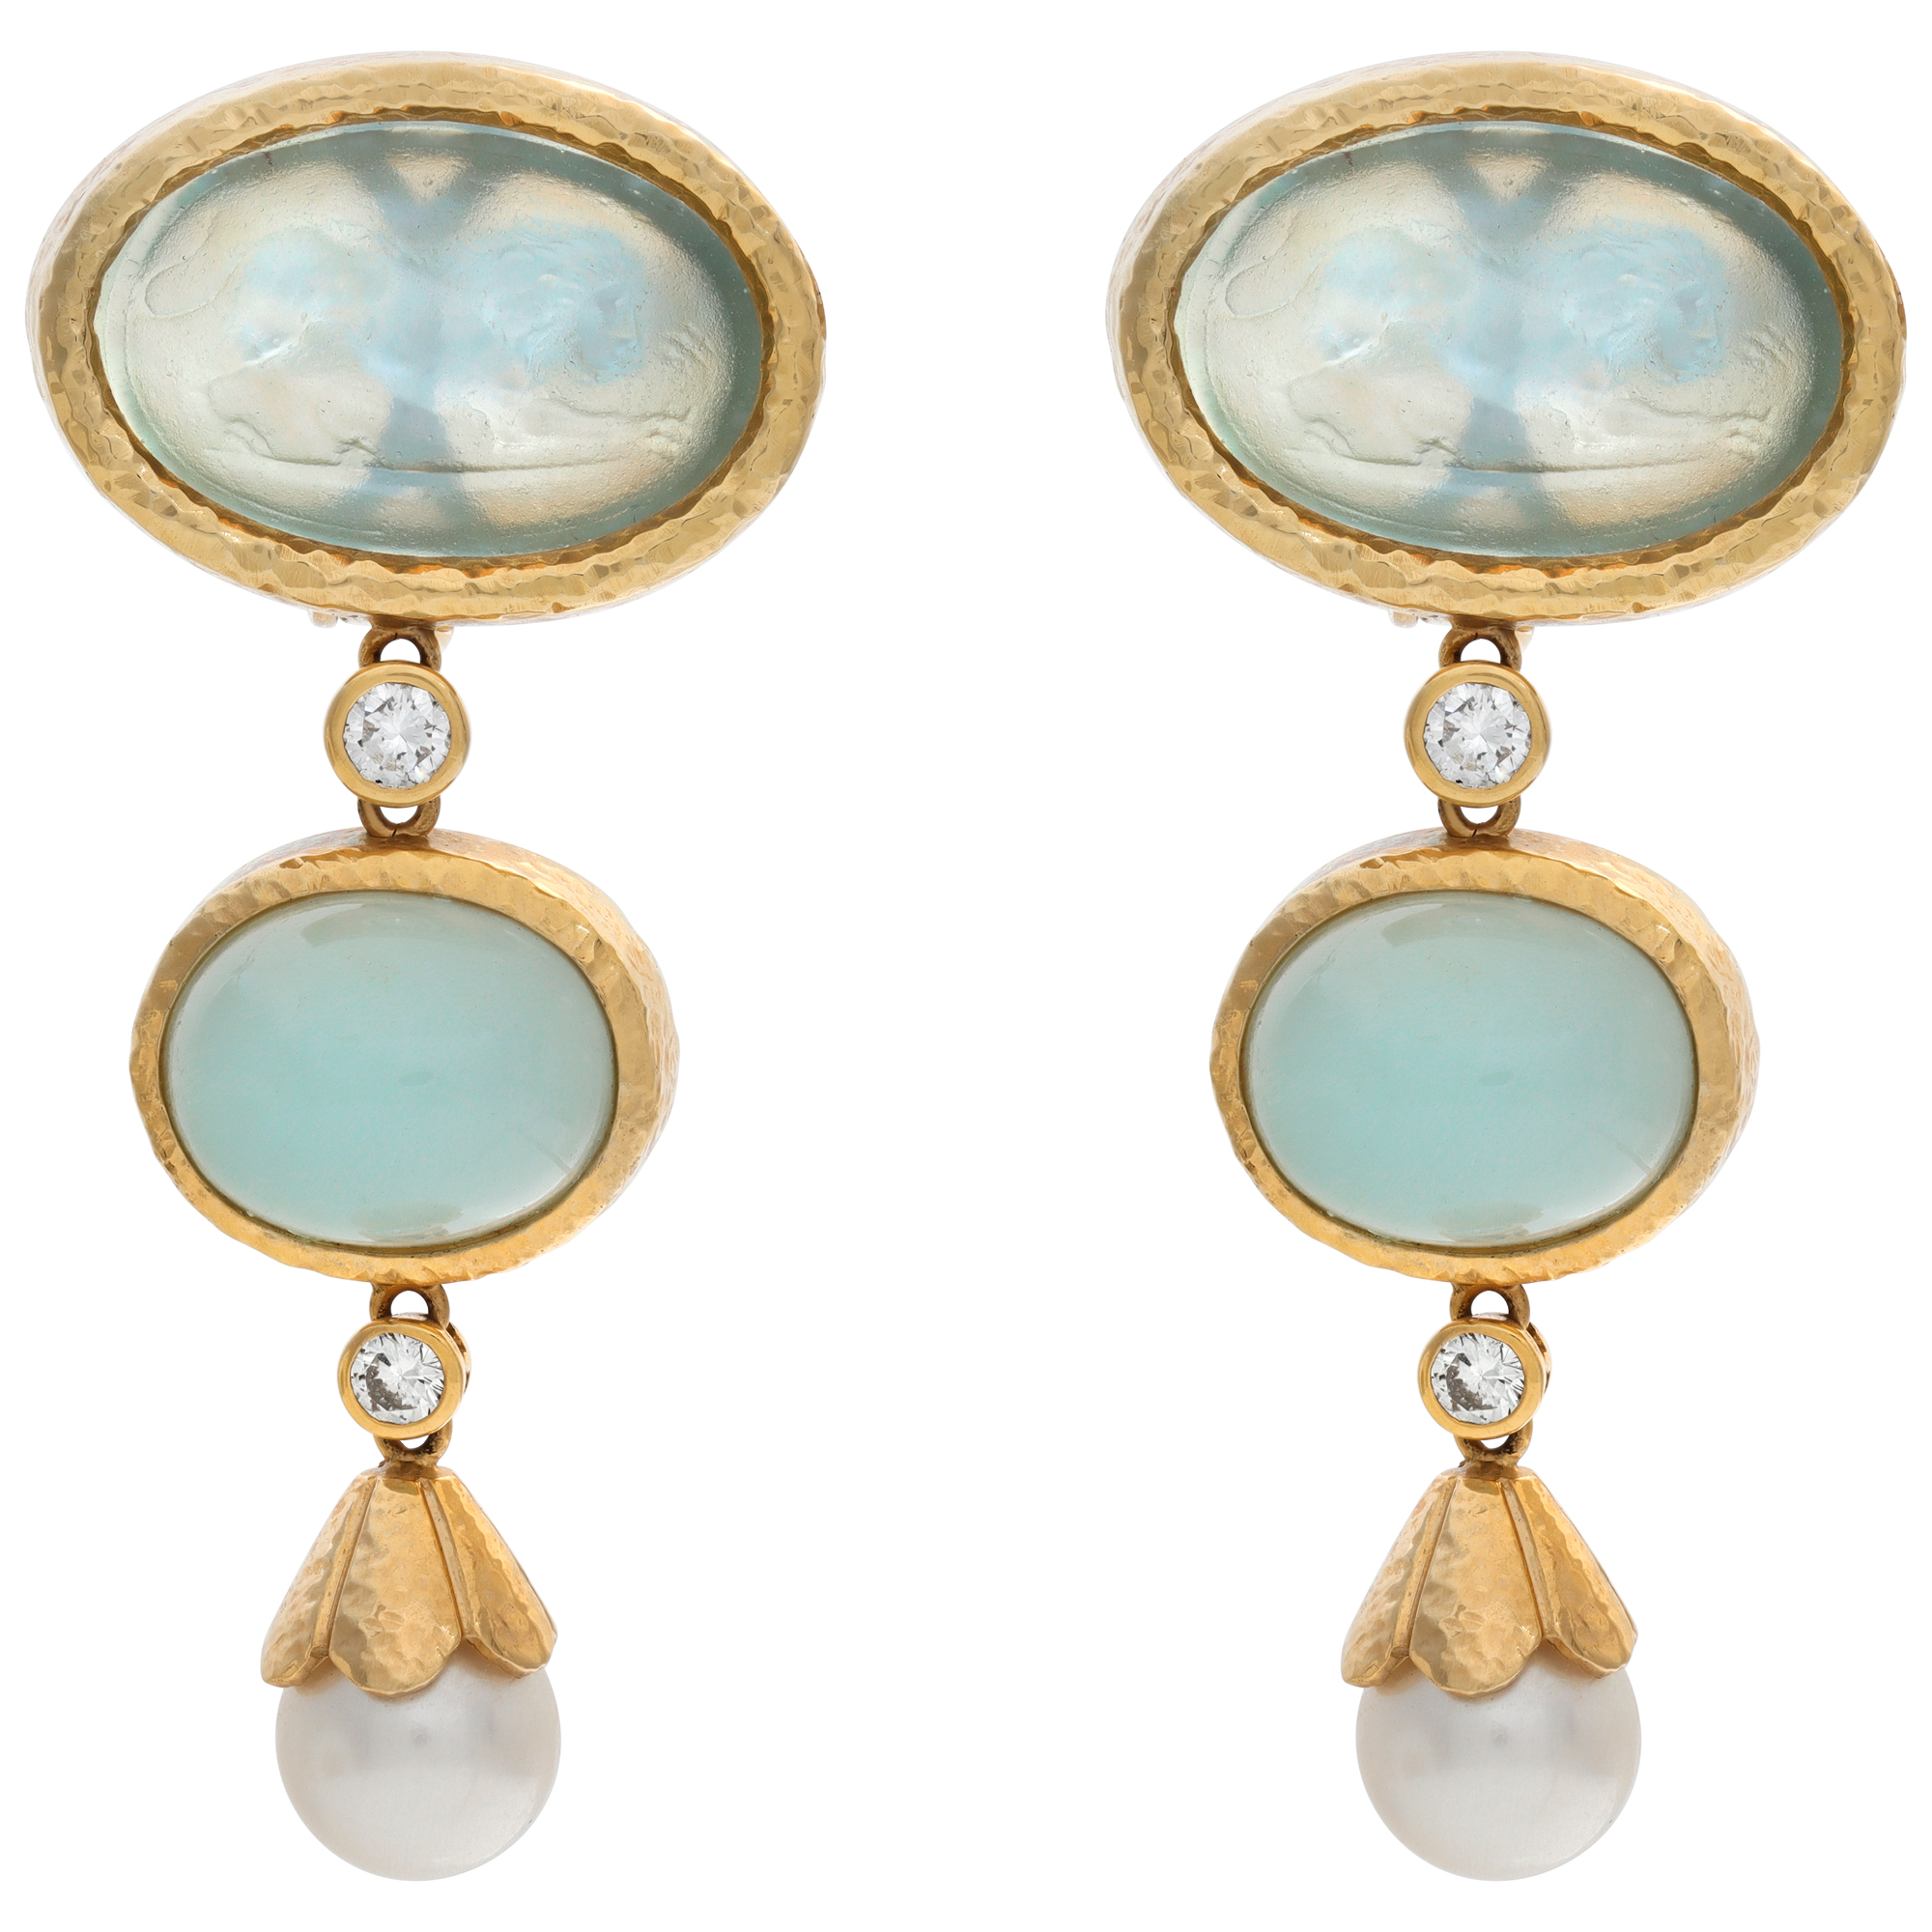 Drop earrings with seafoam chalcedony, pearls and diamonds in 14k